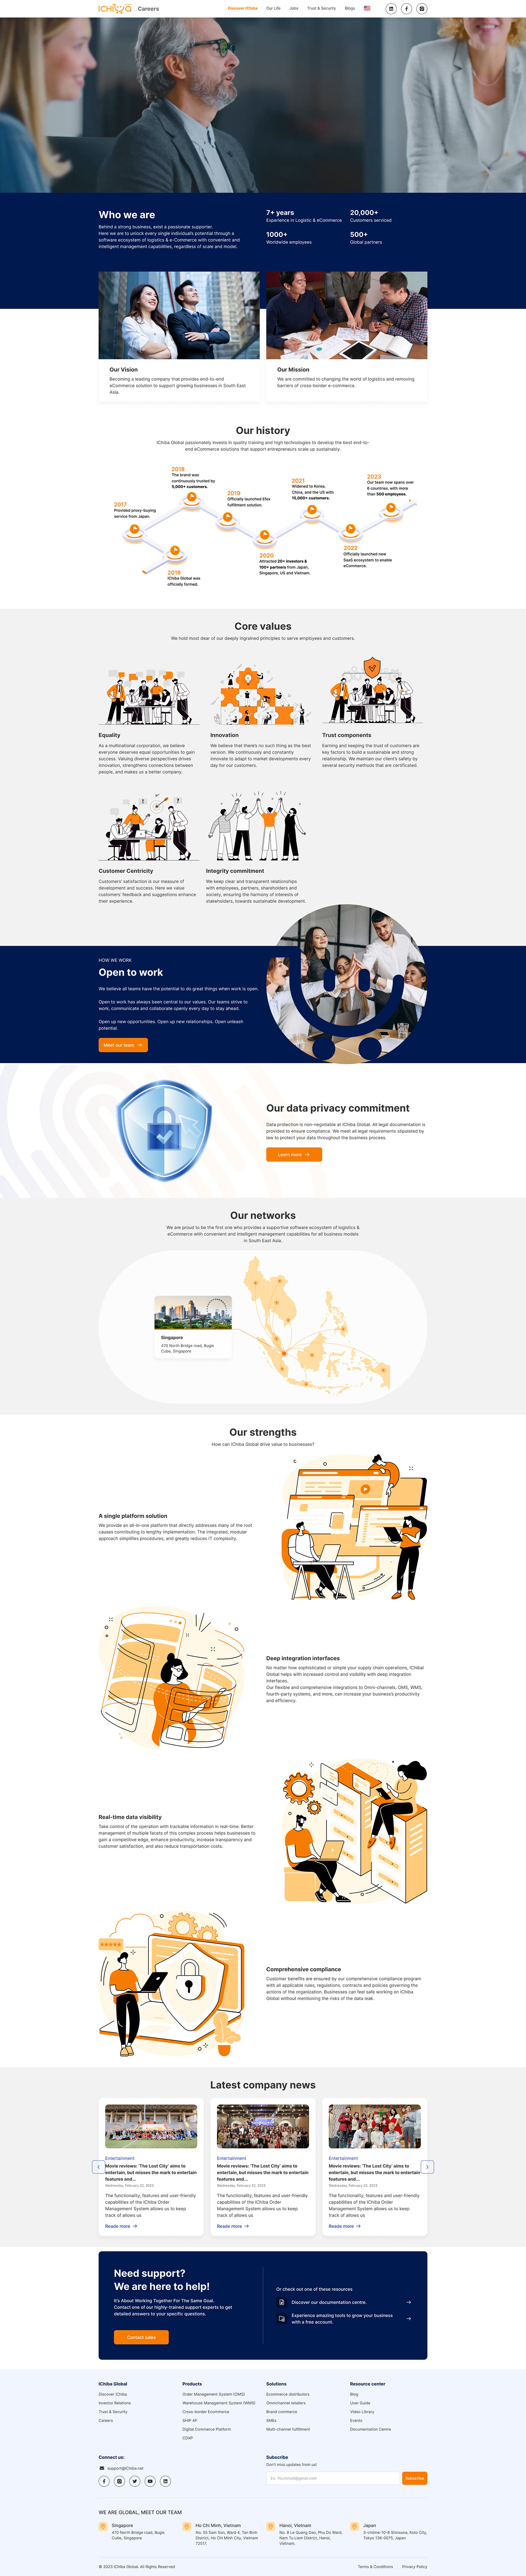 DesignWeb company discovery career landing page ui design Figma